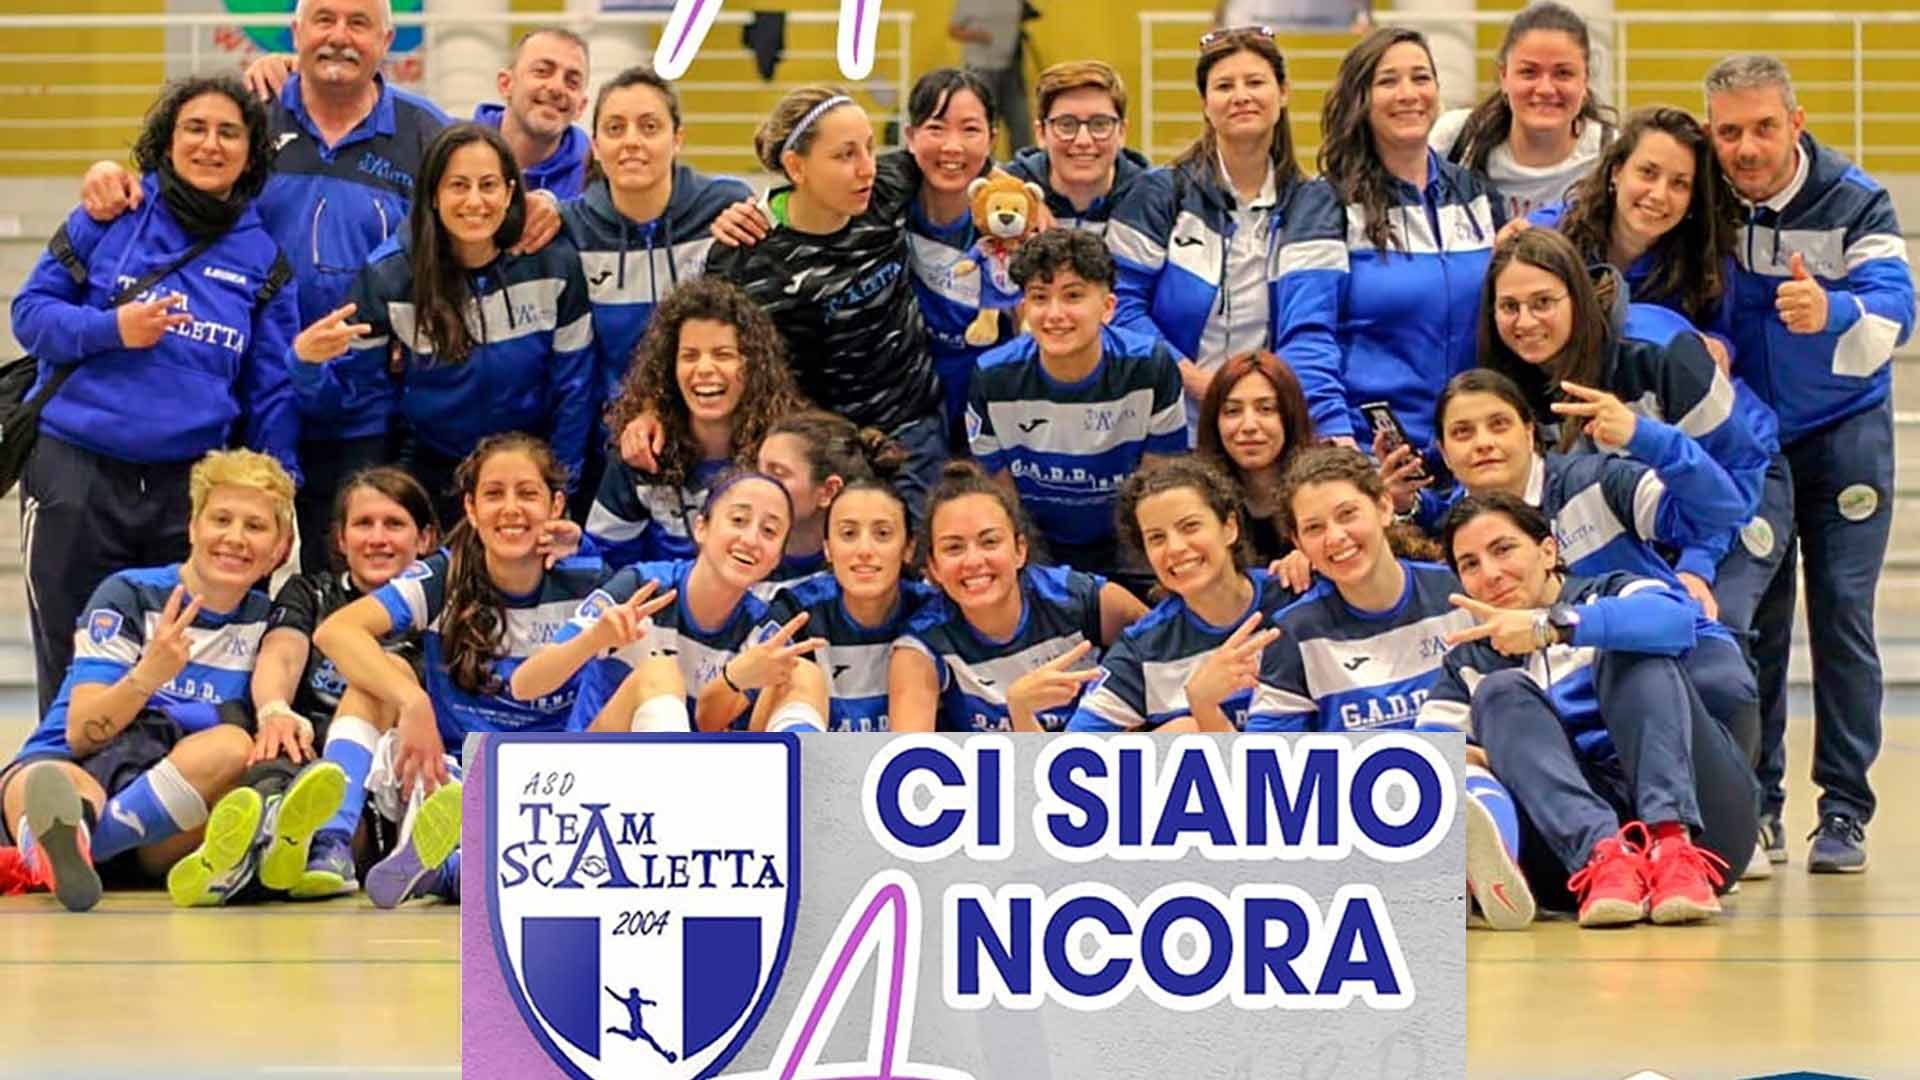 Team Scaletta_MessinaWebTv_Sport